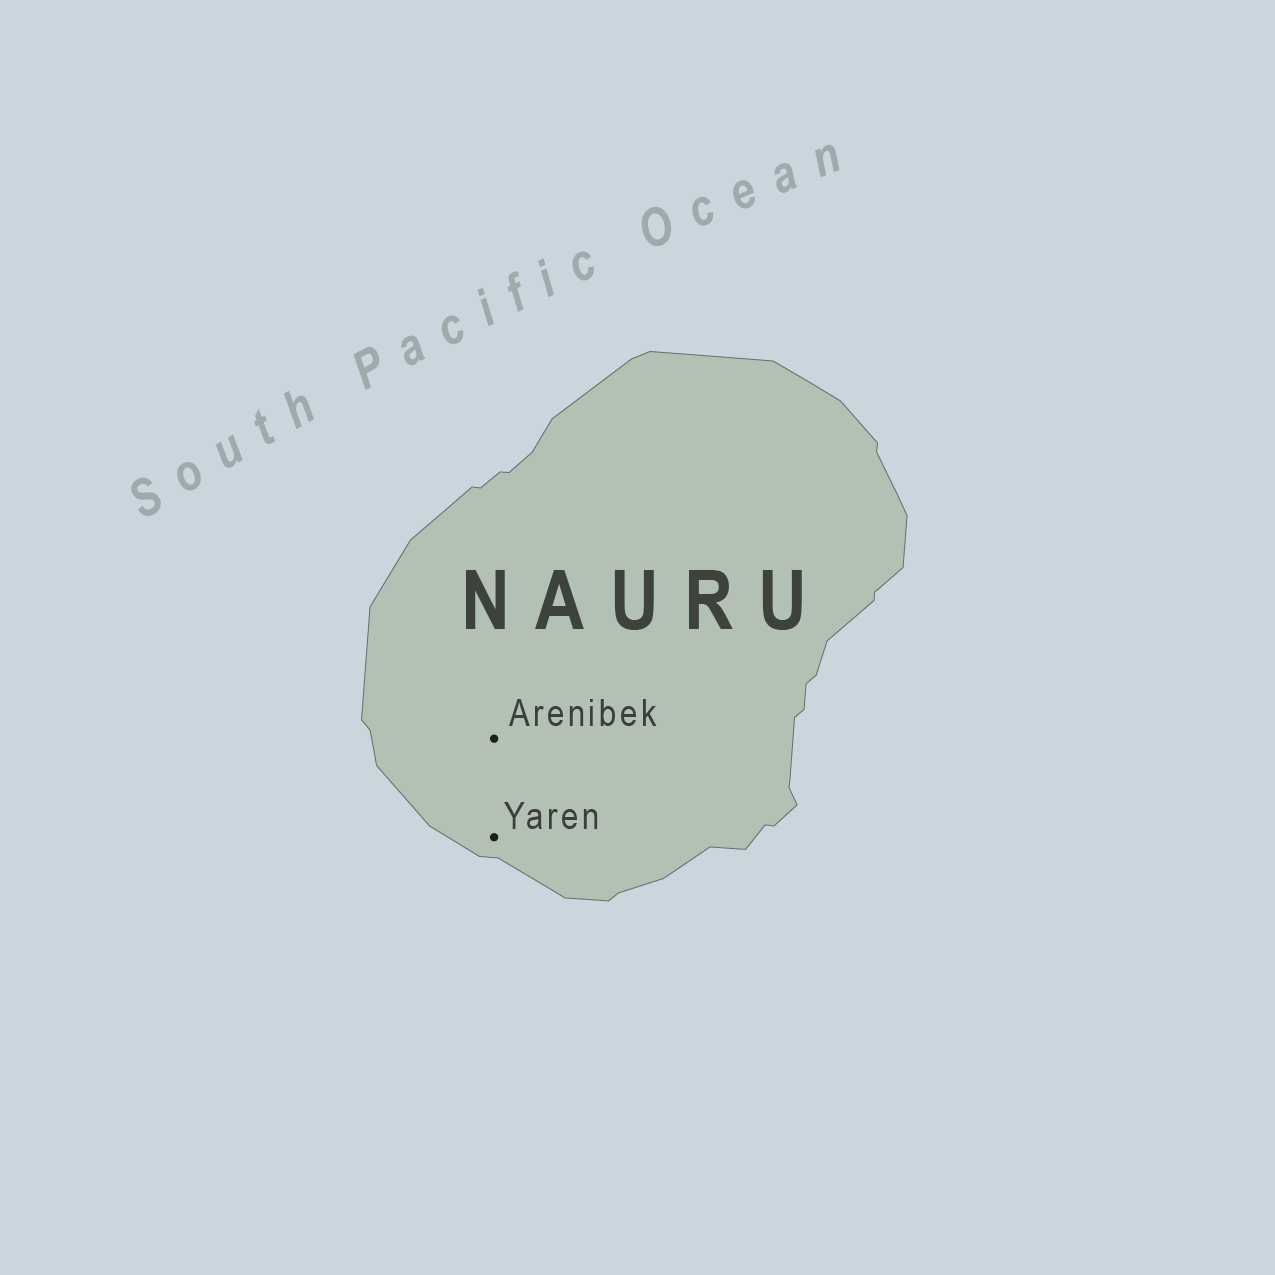 Map - Nauru